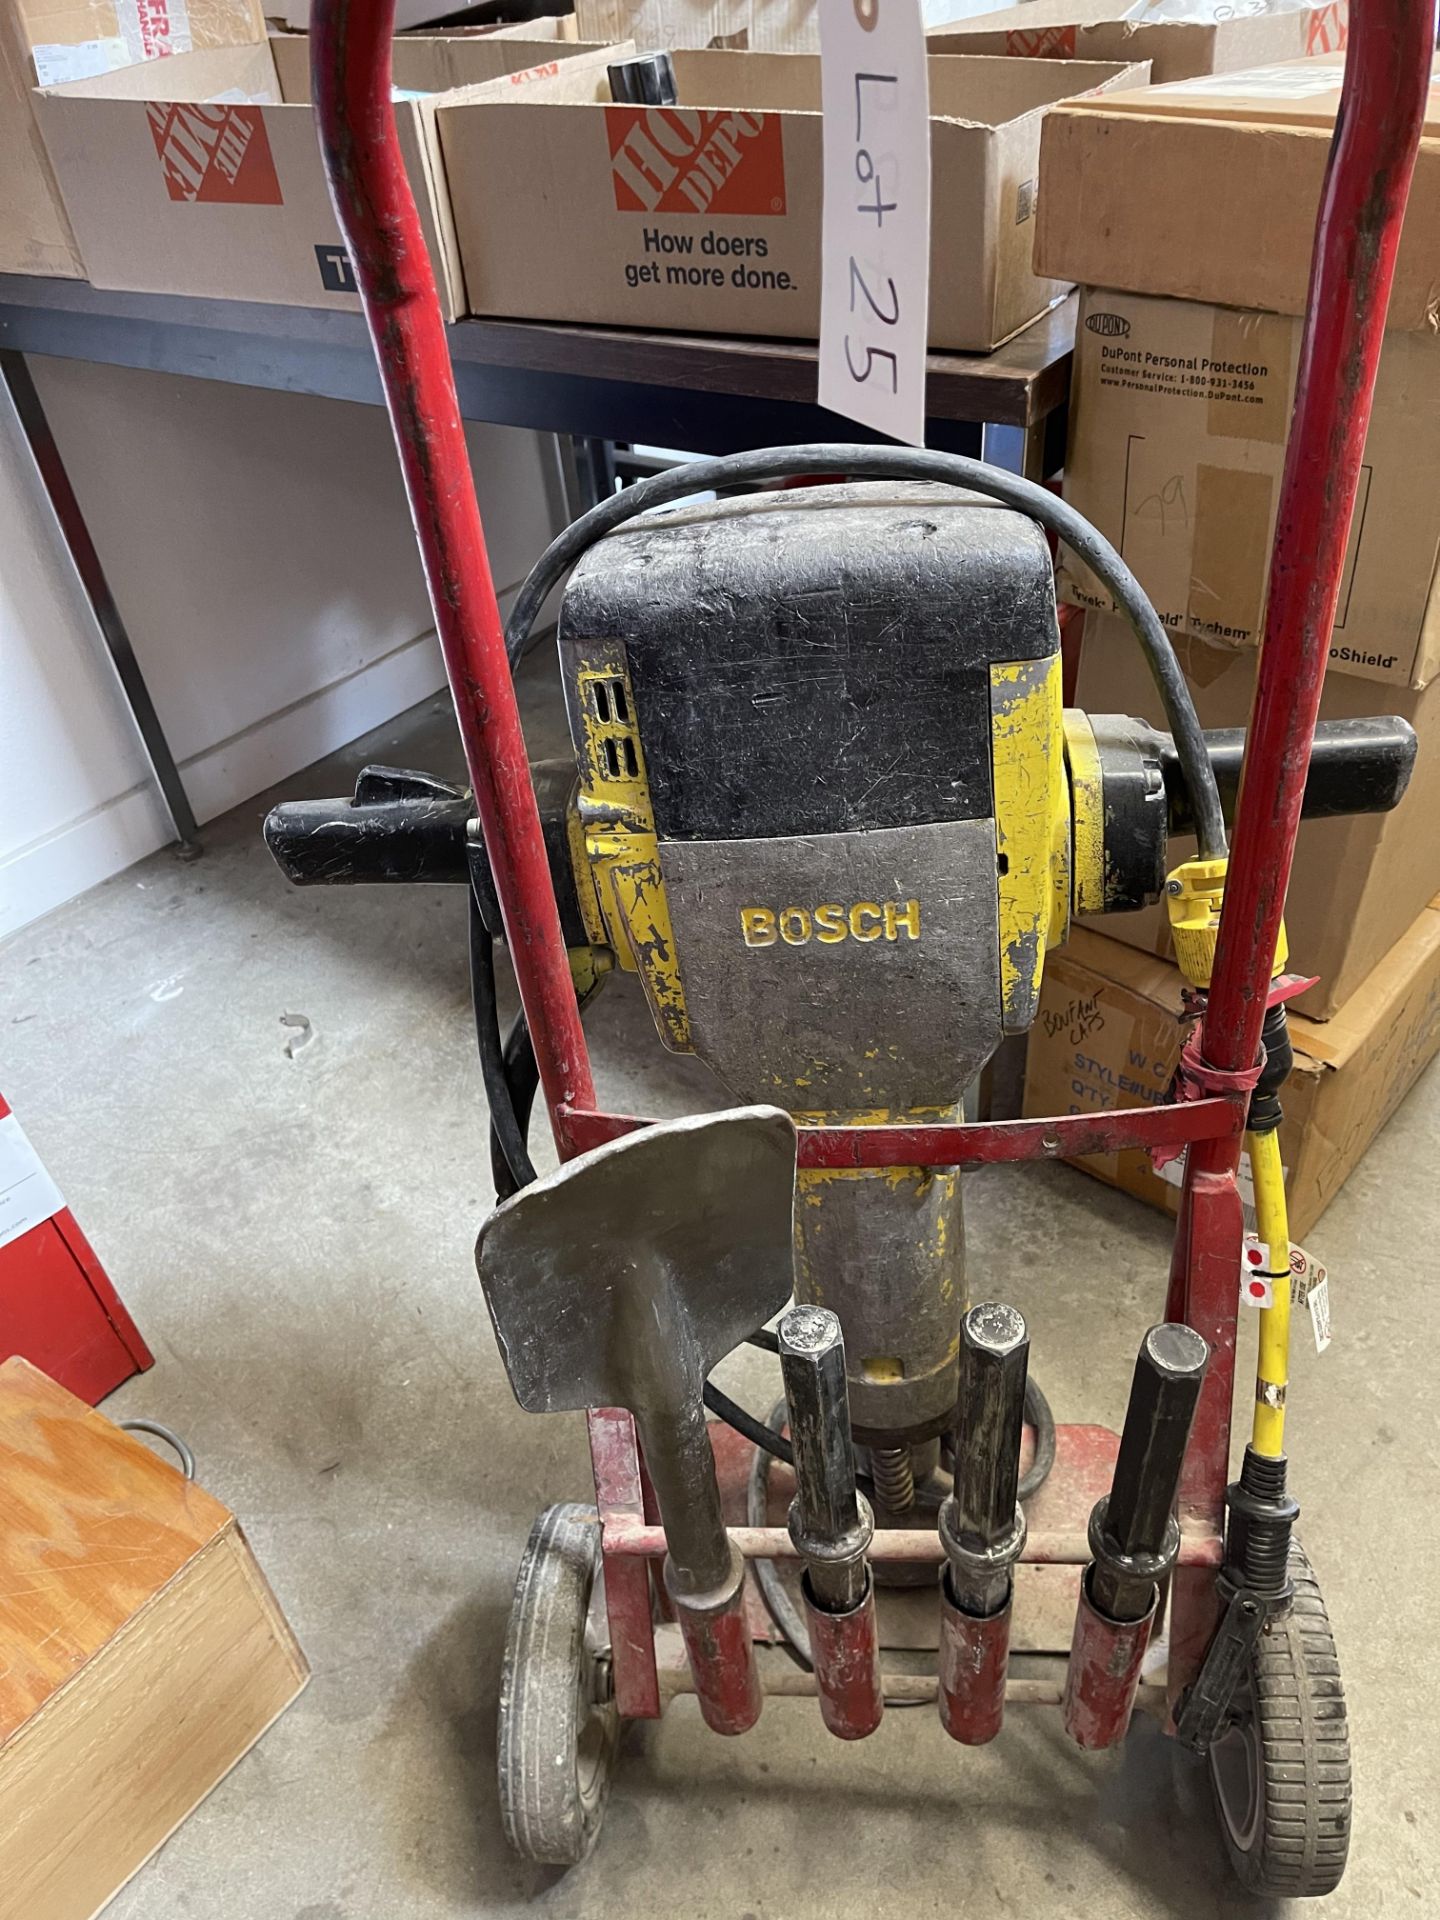 Bosch 611 304 jack hammer - Image 2 of 3